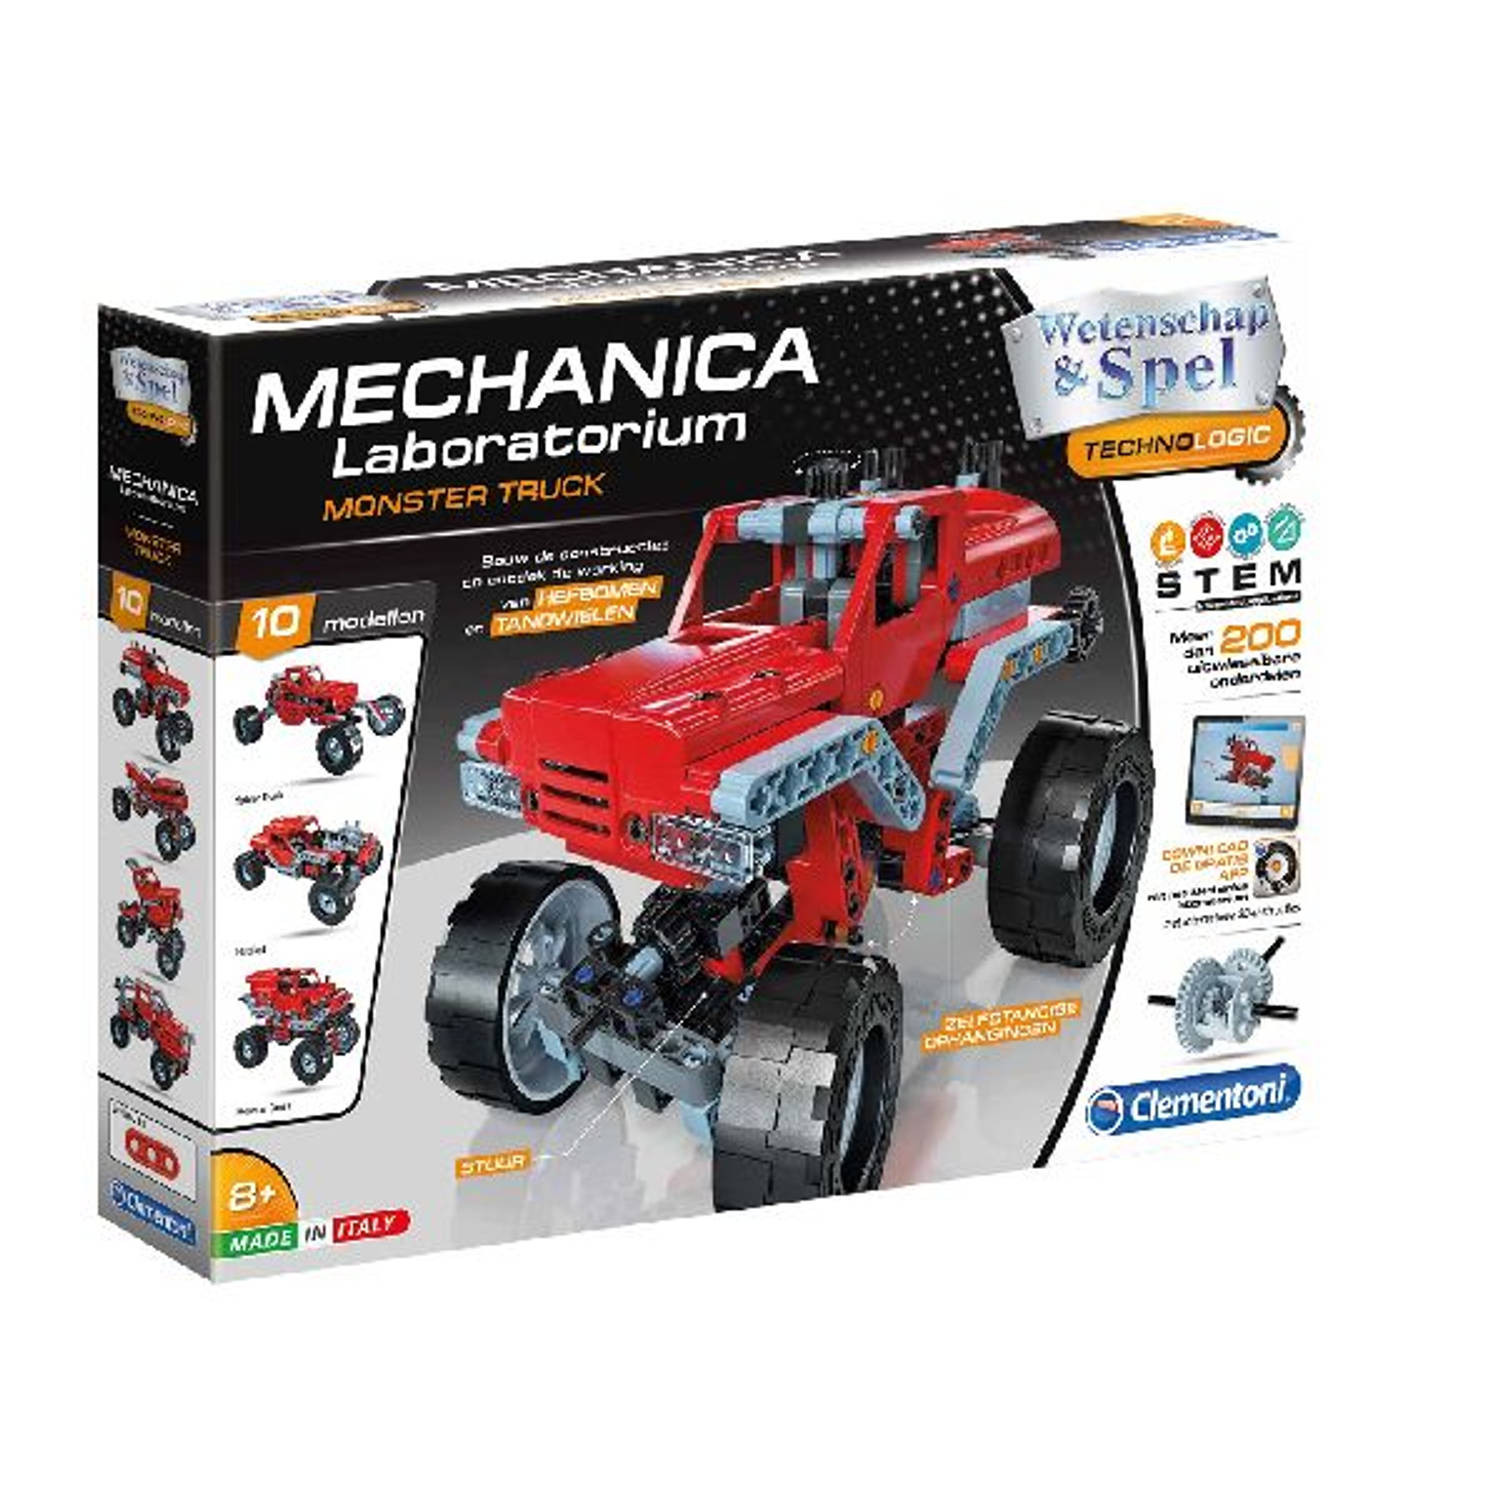 Clementoni bouwpakket Mechanica Laboratorium Monster trucks